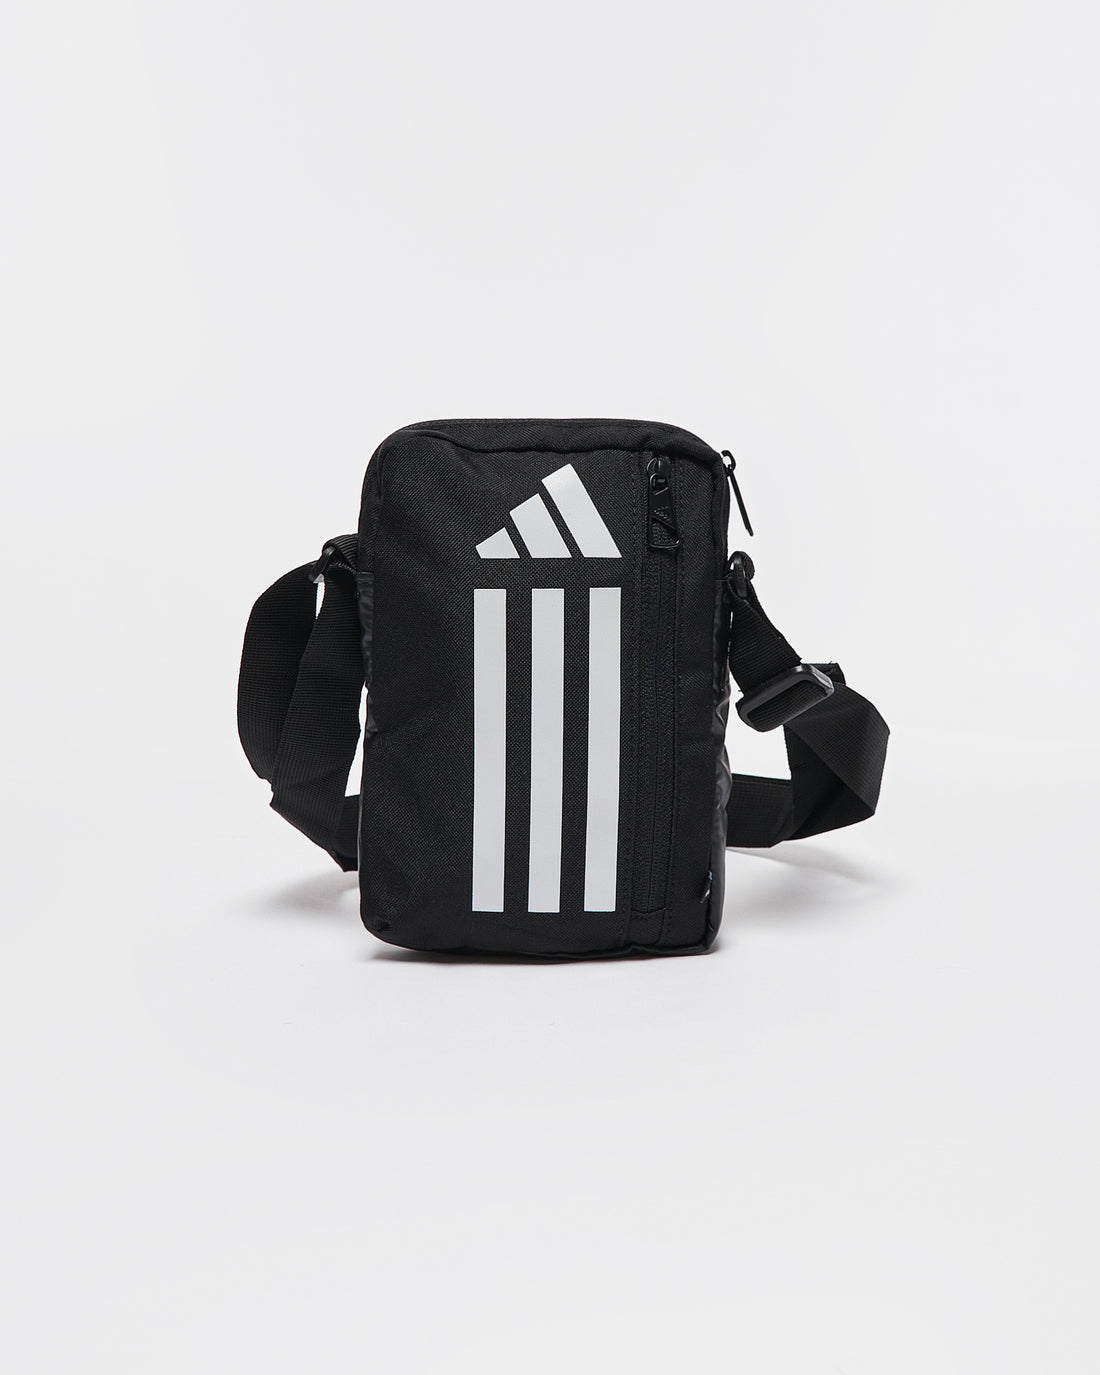 ADI Striped Black Sling Bag 13.90